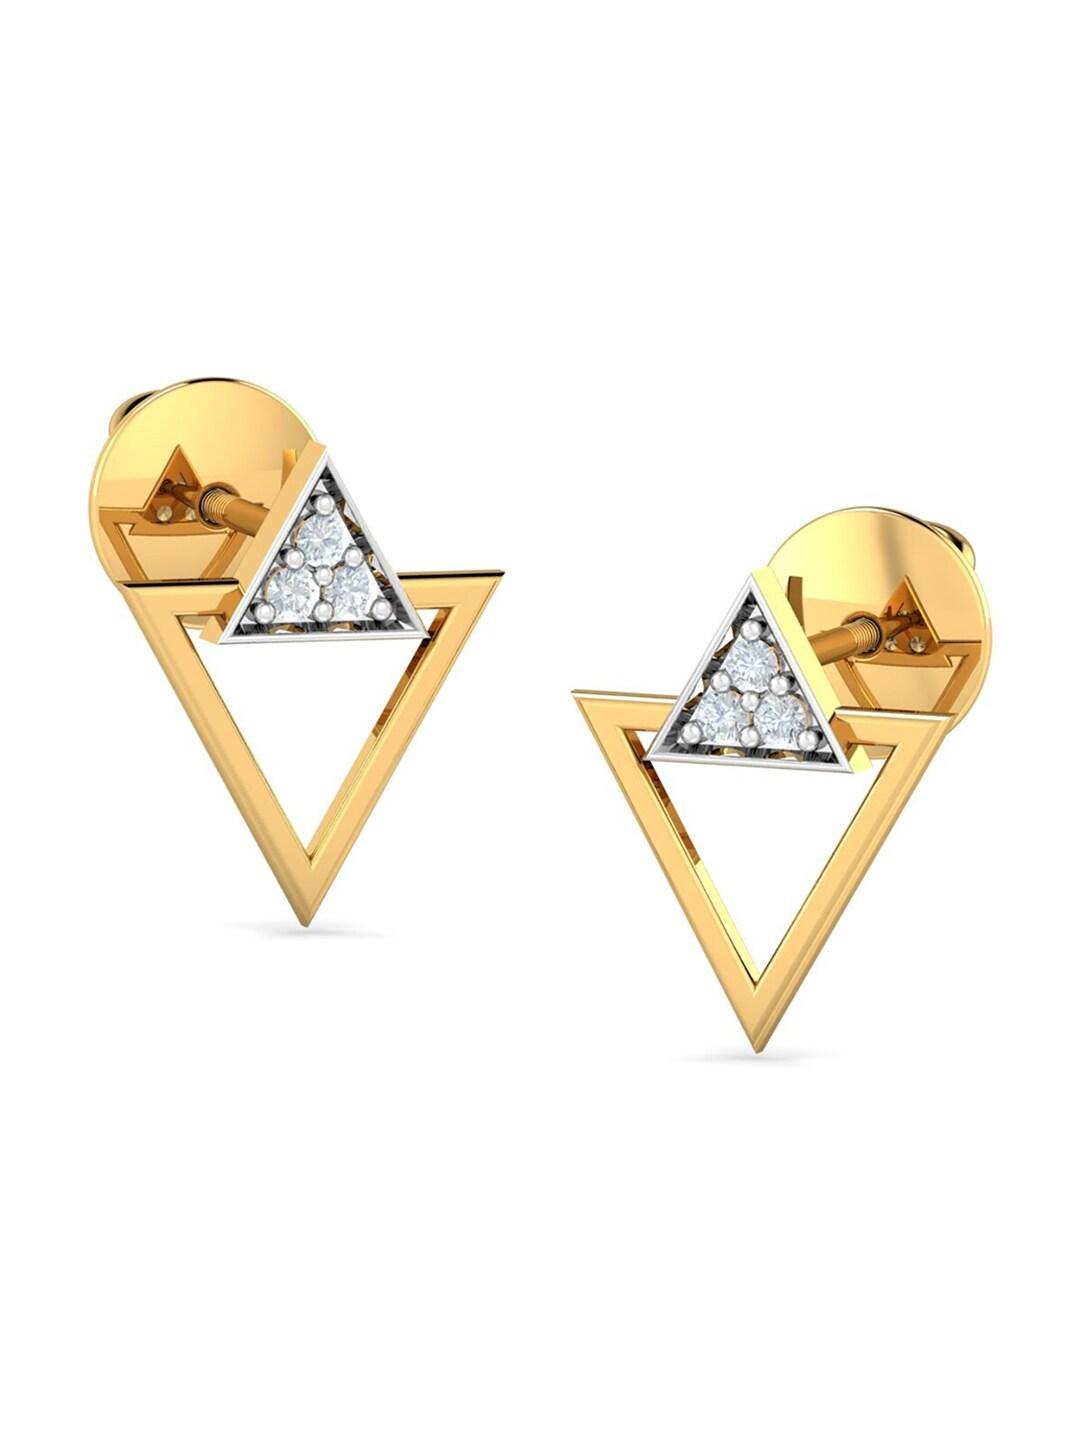 KUBERBOX 18KT Gold Diamond Stud Earrings- 1.53 gm